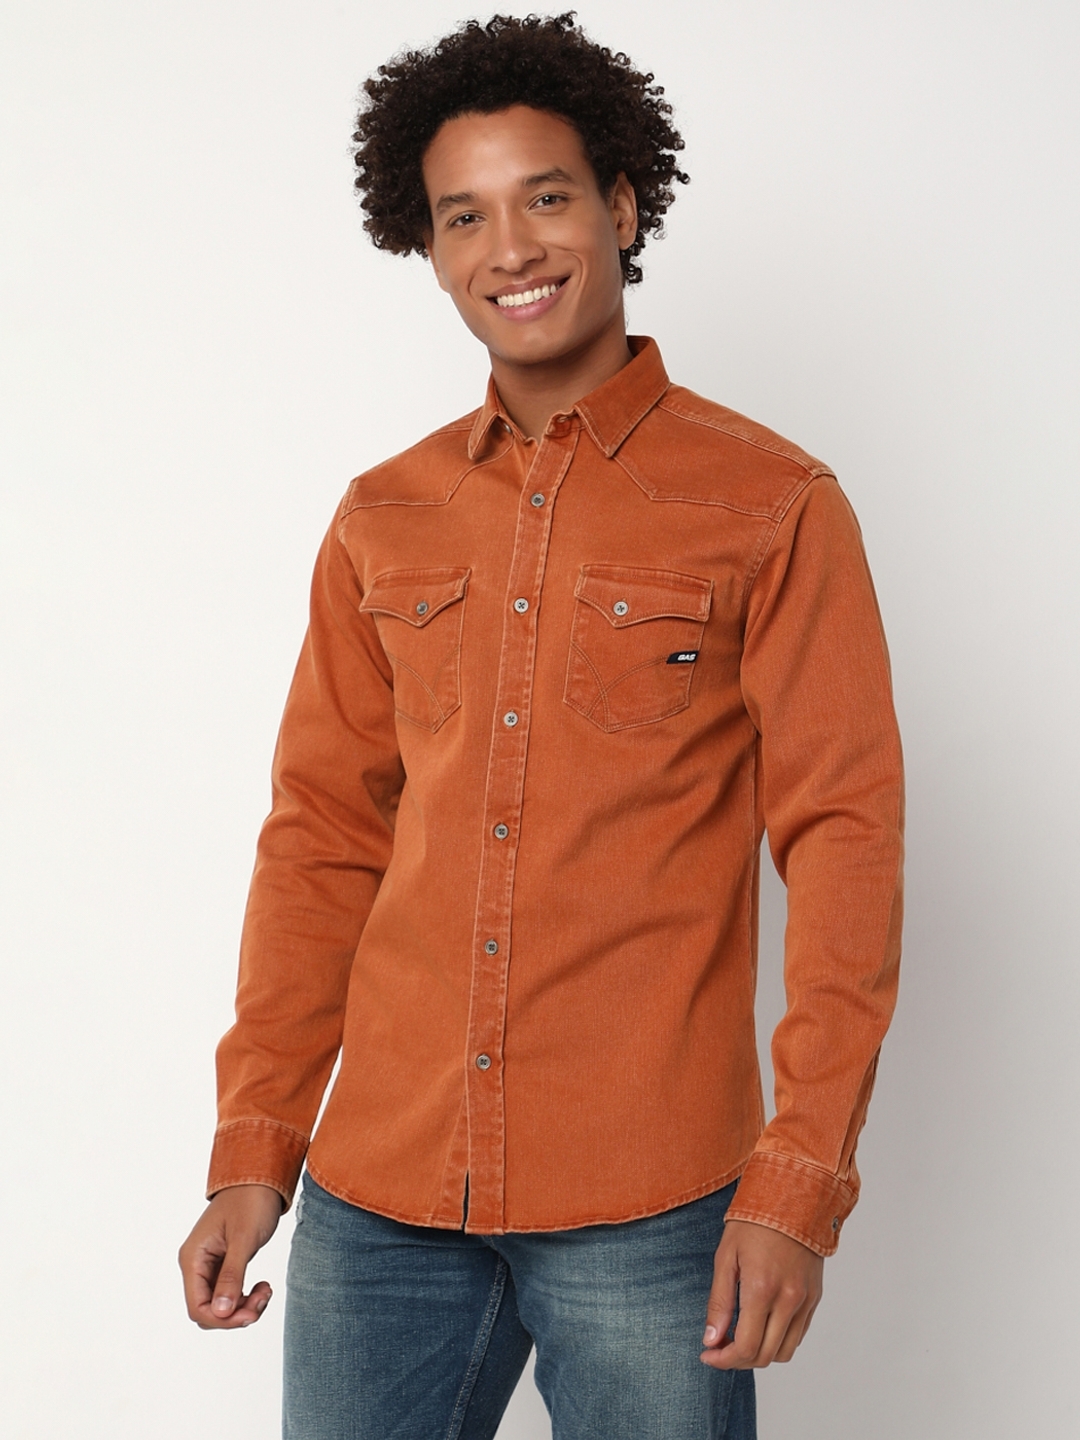 Aggregate more than 228 denim brown shirt